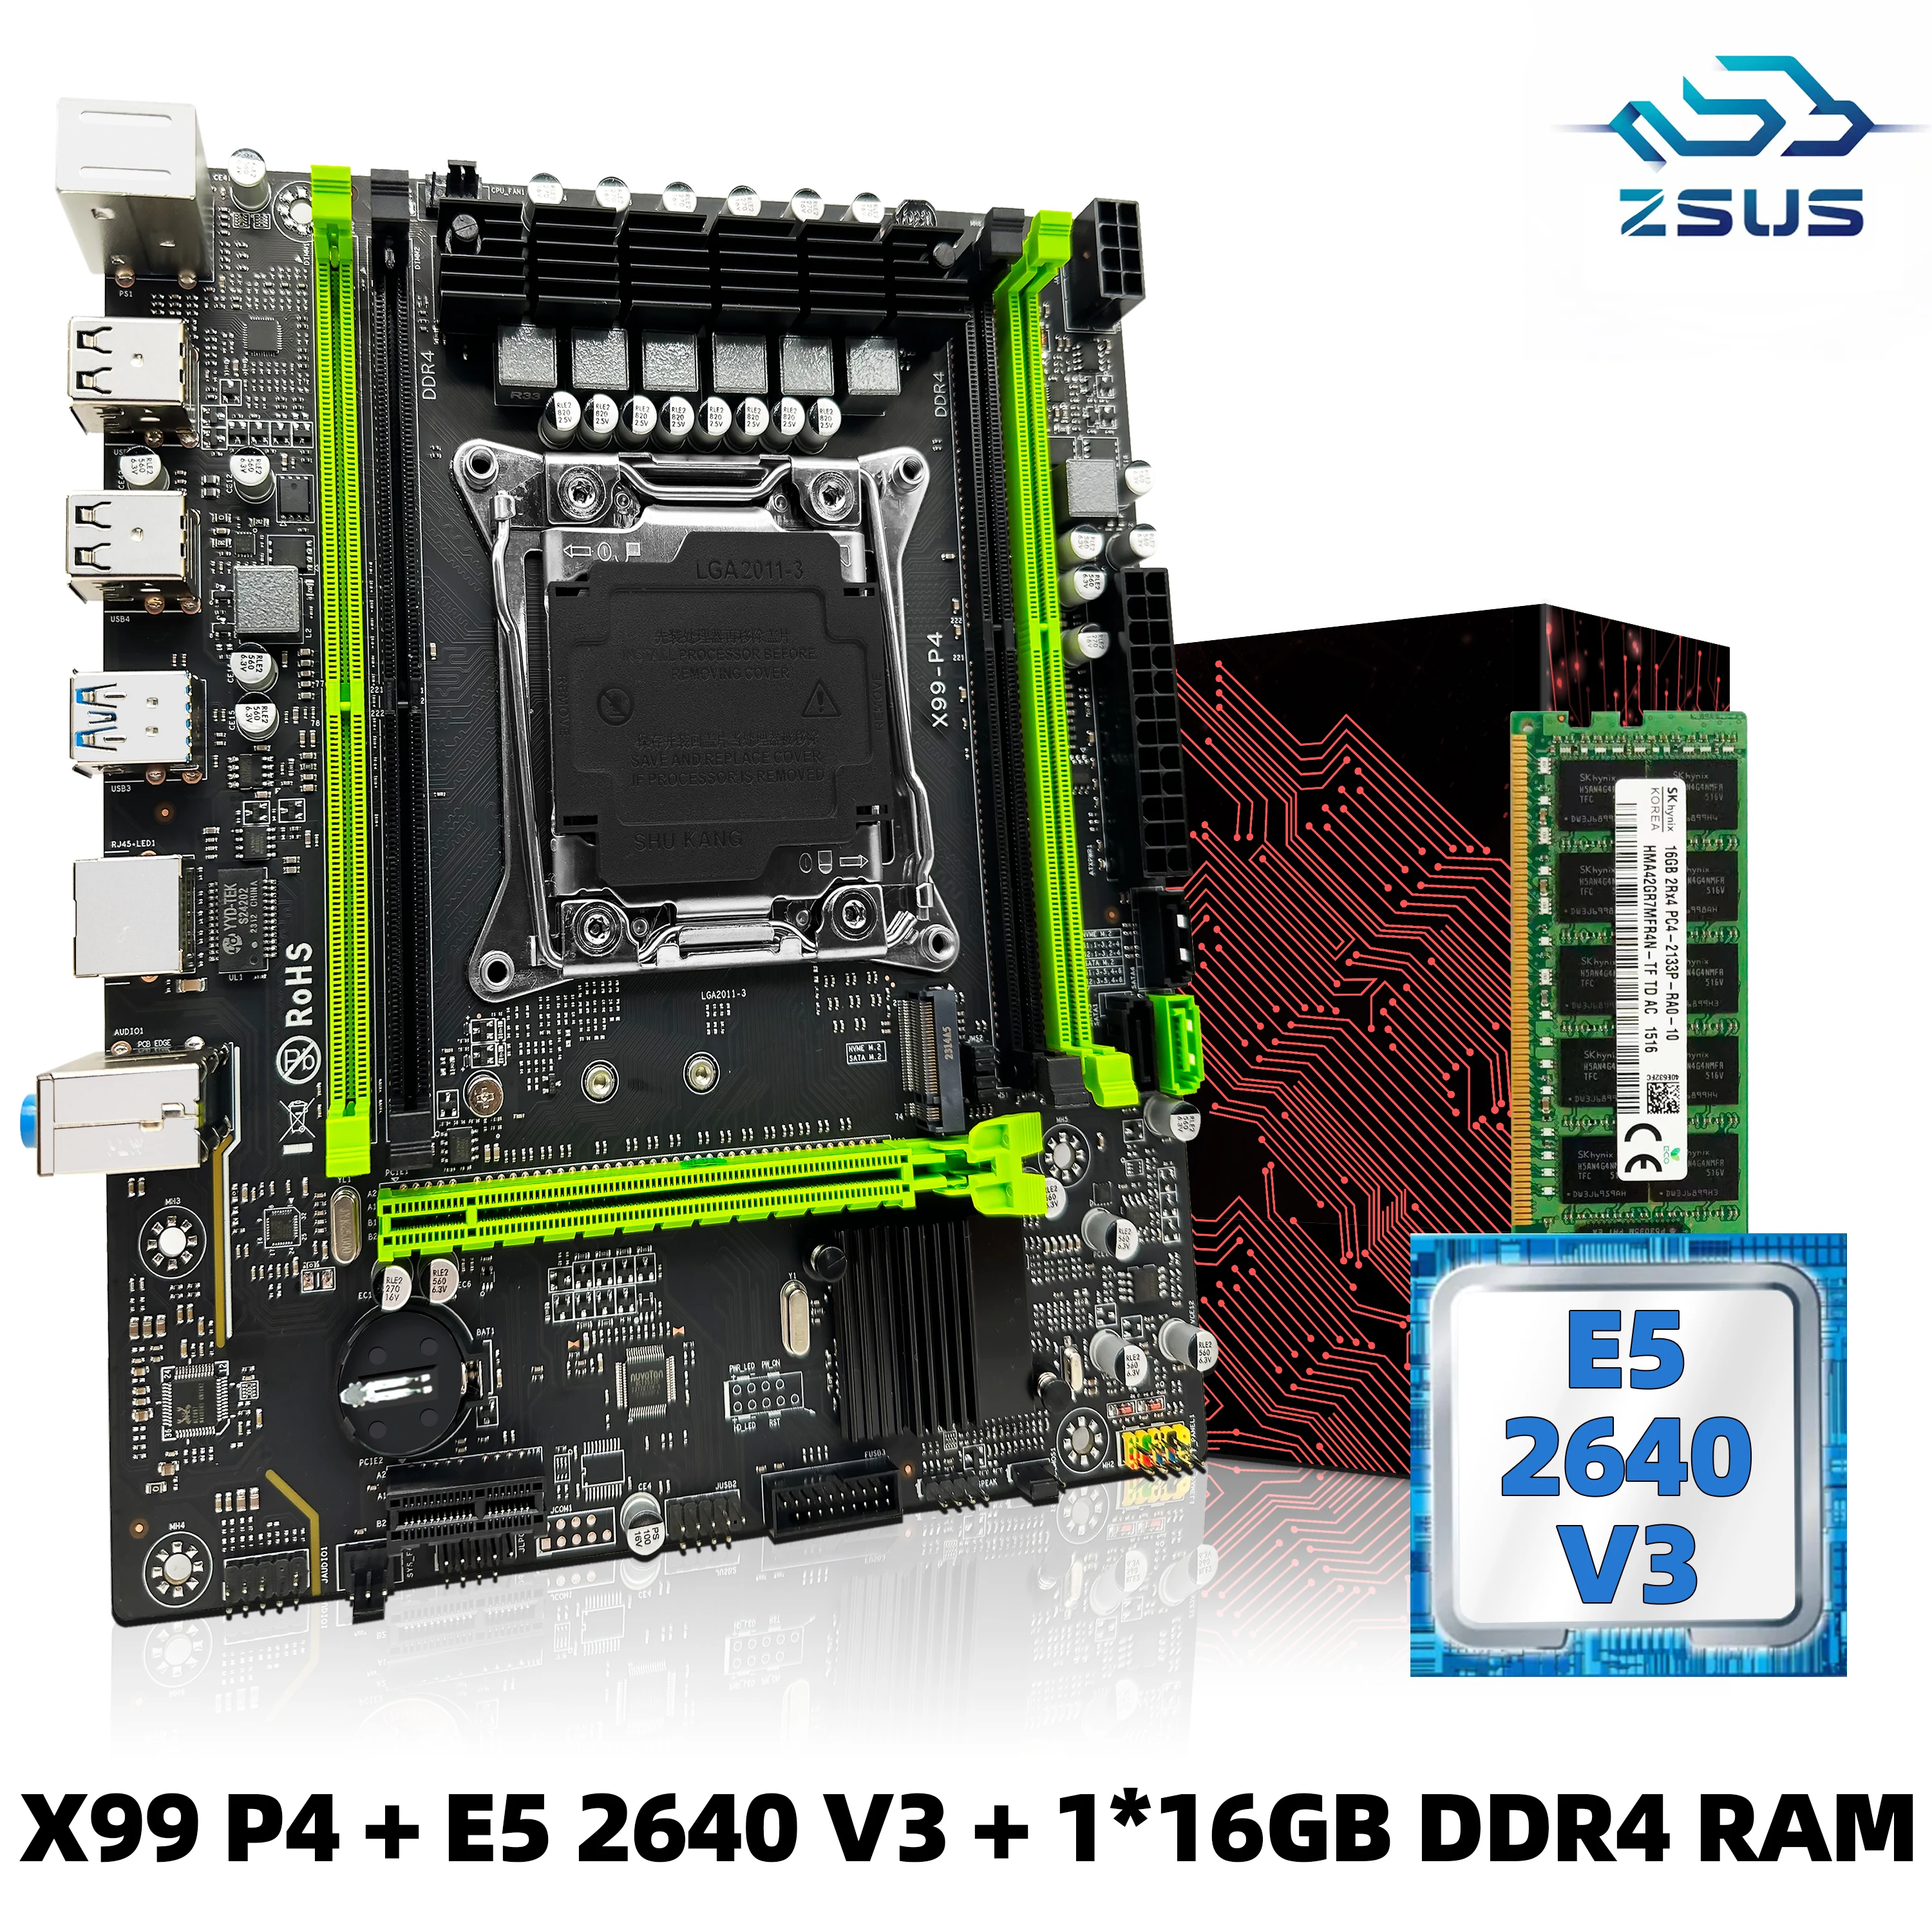 ZSUS X99 P4 Motherboard Set Kit With Intel LGA2011 3 Xeon E5 2640 V3 CPU DDR4 16GB 1*16GB 2133MHZ RAM Memory NVME M.2 SATA